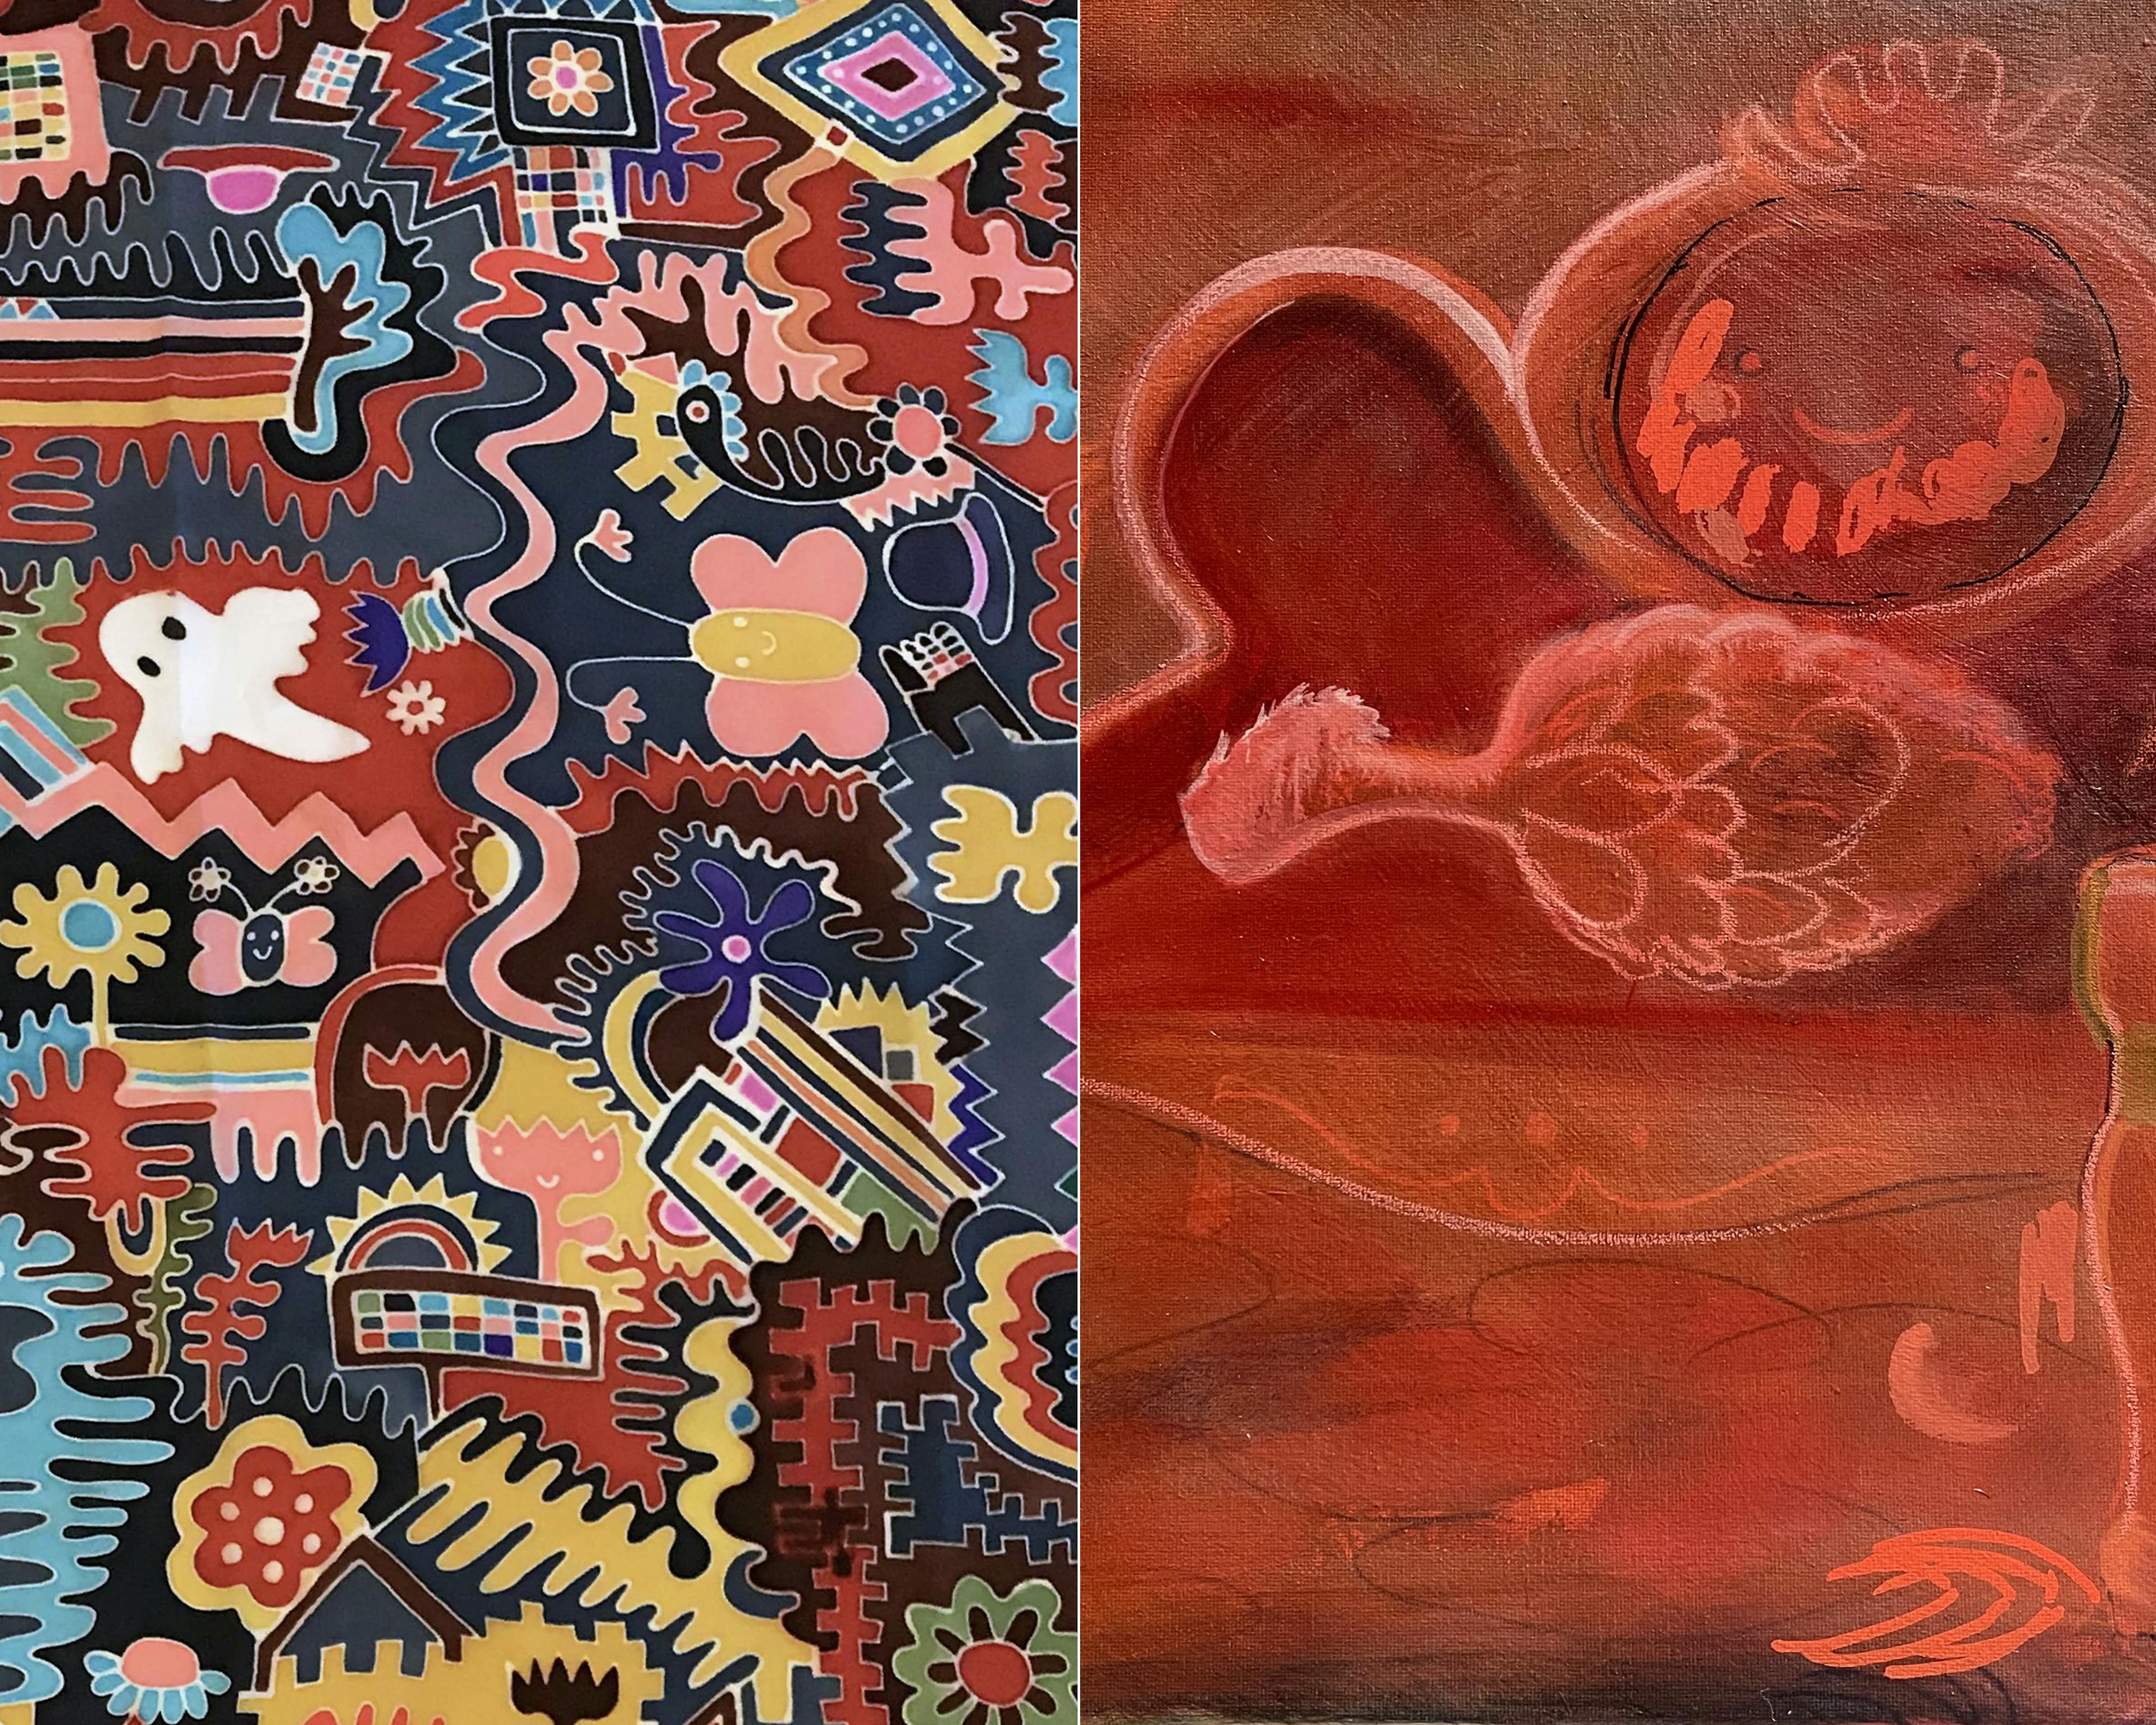 Close-up of artworks by Rebeca Raney and Nefertiti Jenkins.